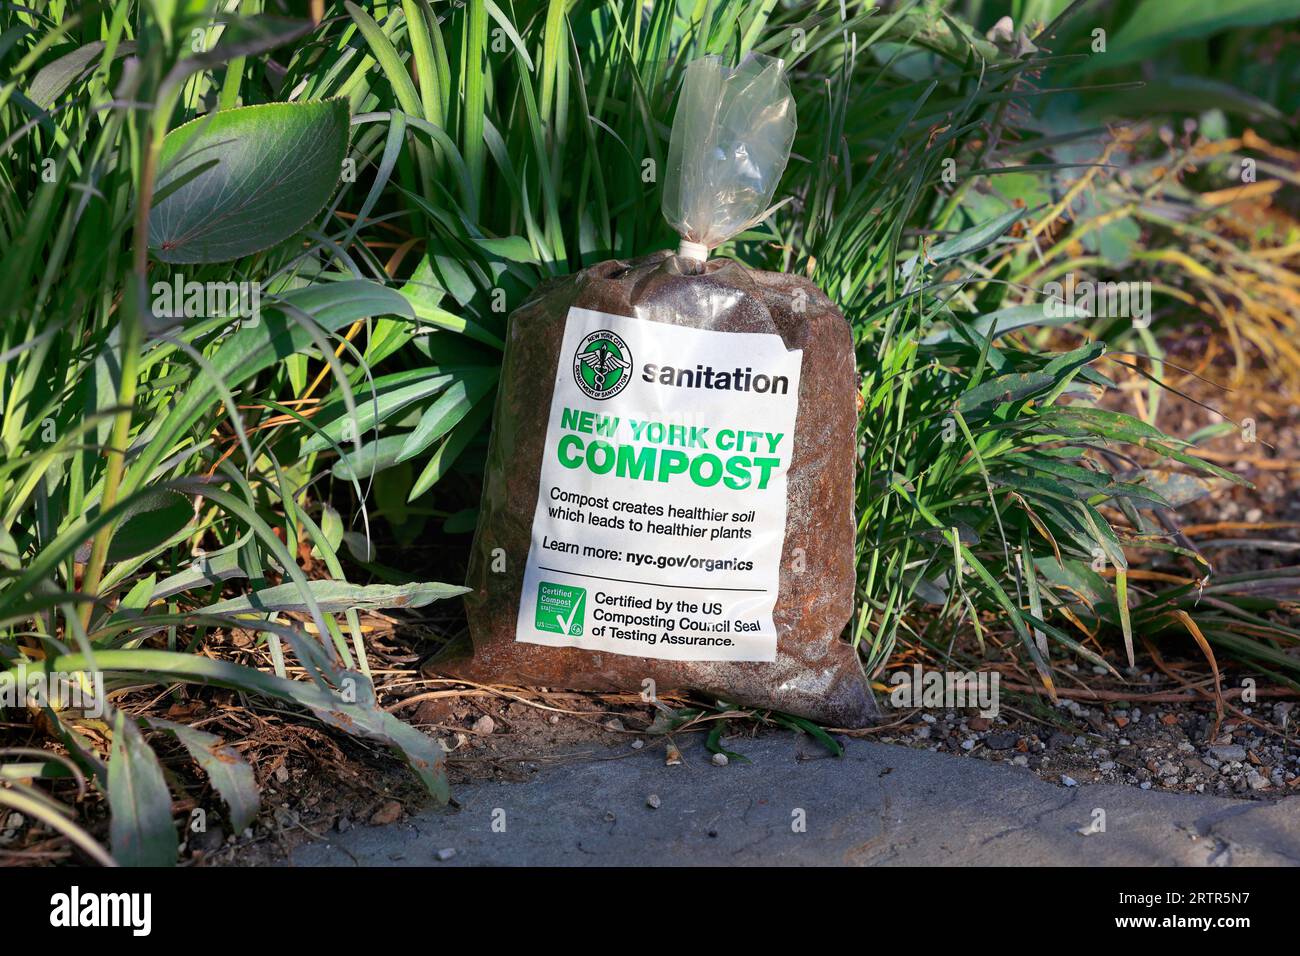 A bag of NYC Sanitation branded New York City Compost. Stock Photo